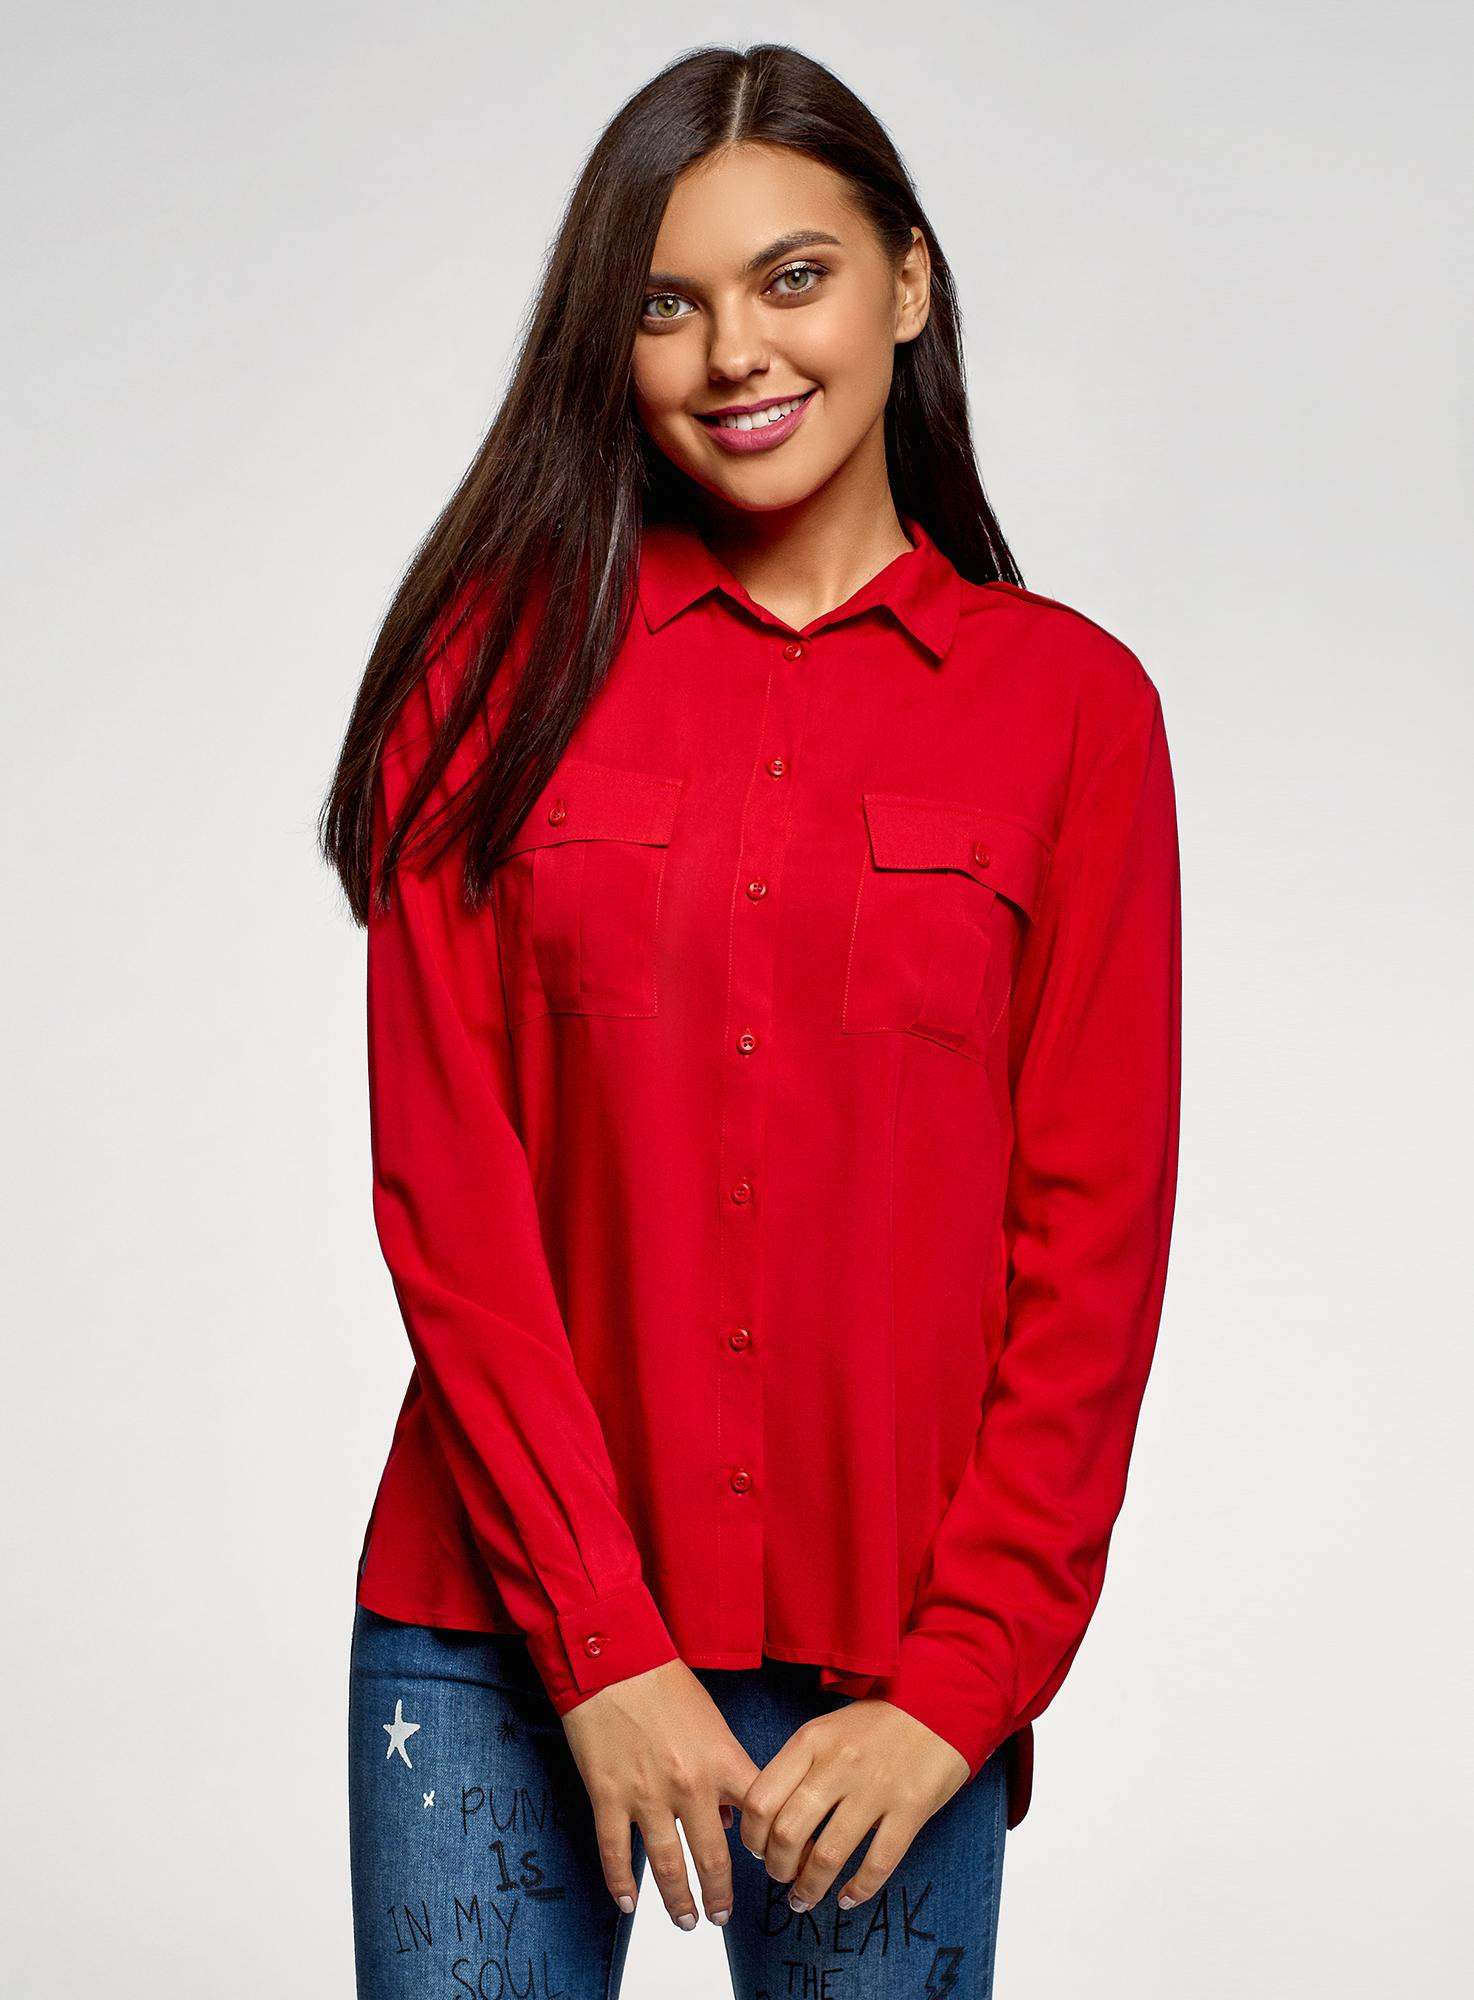 Блузки красного цвета. Oodji блузка красная. Oodji красная кофта. Красная рубашка oodji. Красная рубашка женская.